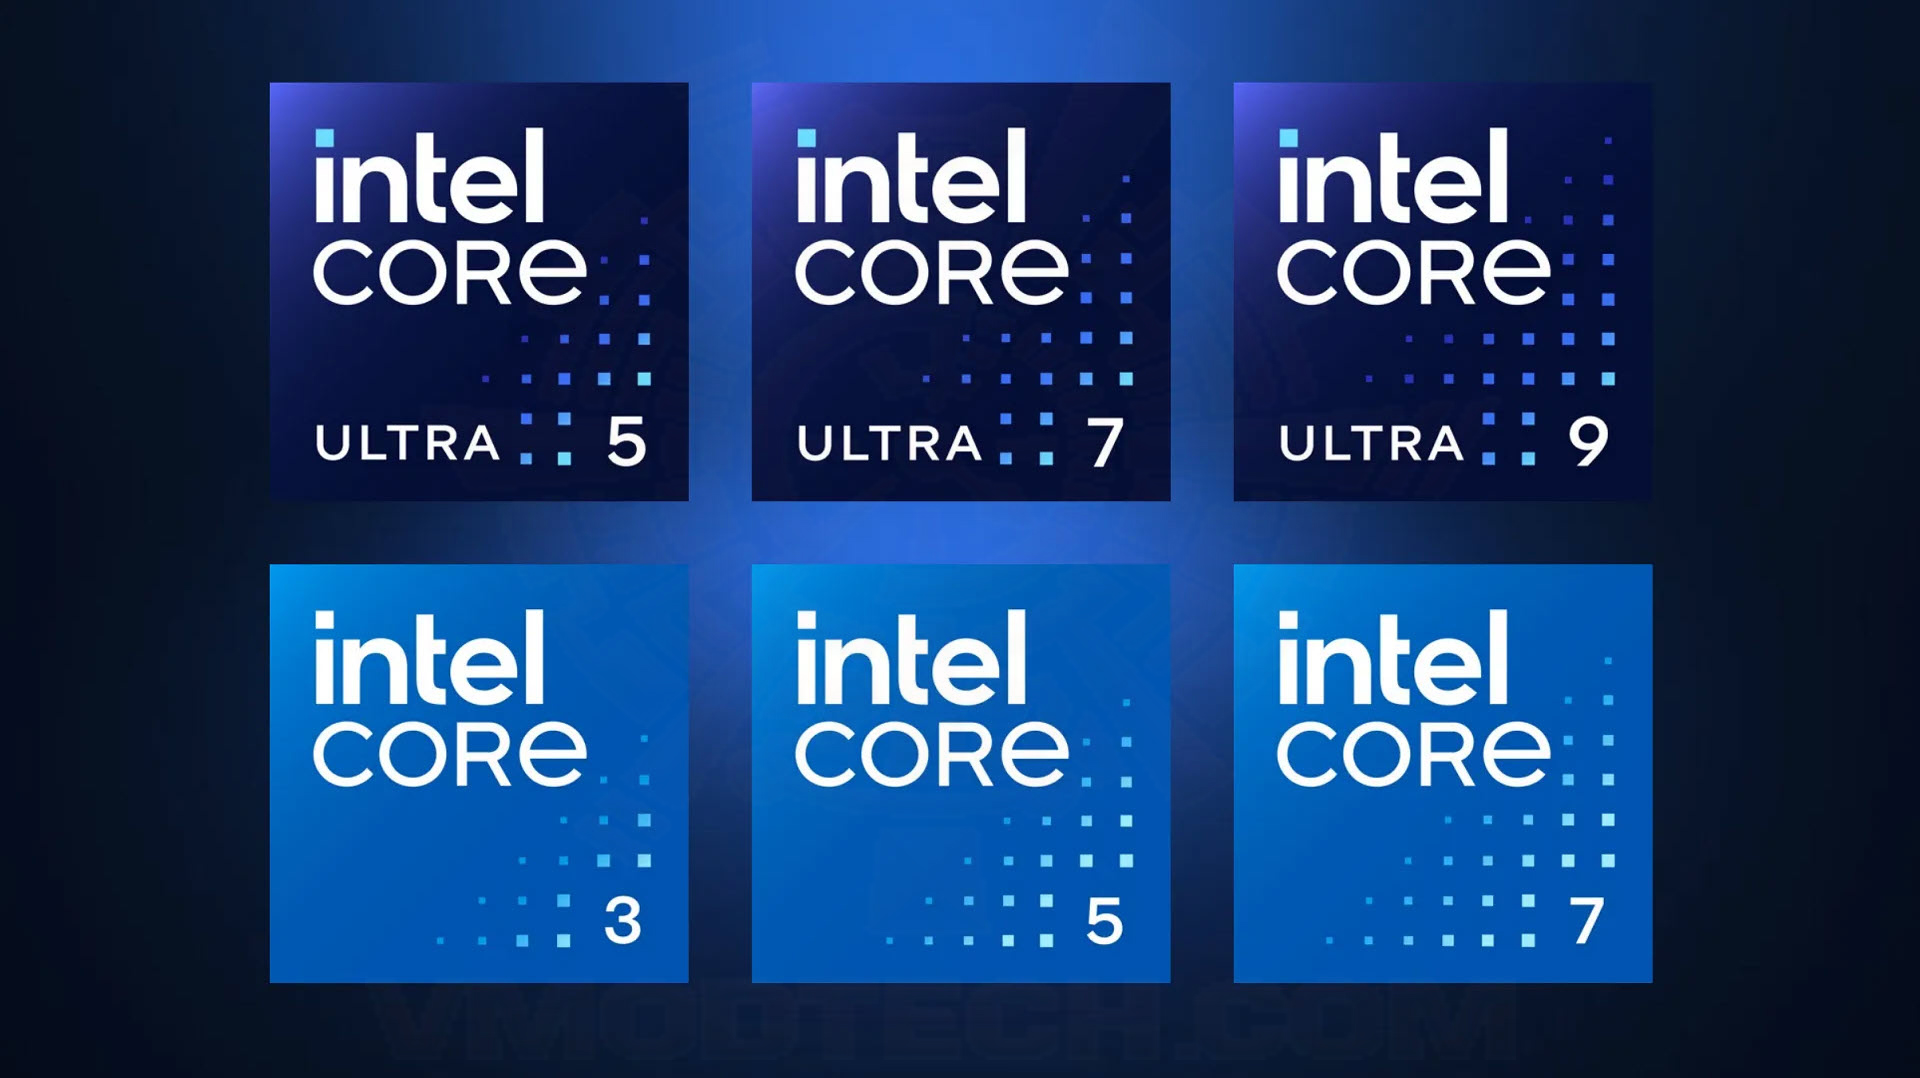 intel core ultra อินเทลเผยภาพโลโก้ใหม่ซีพียู Intel Meteor Lake รุ่นที่ 14 โดยตัด i ออกในชื่อ Intel Core Ultra รุ่นใหม่ล่าสุด